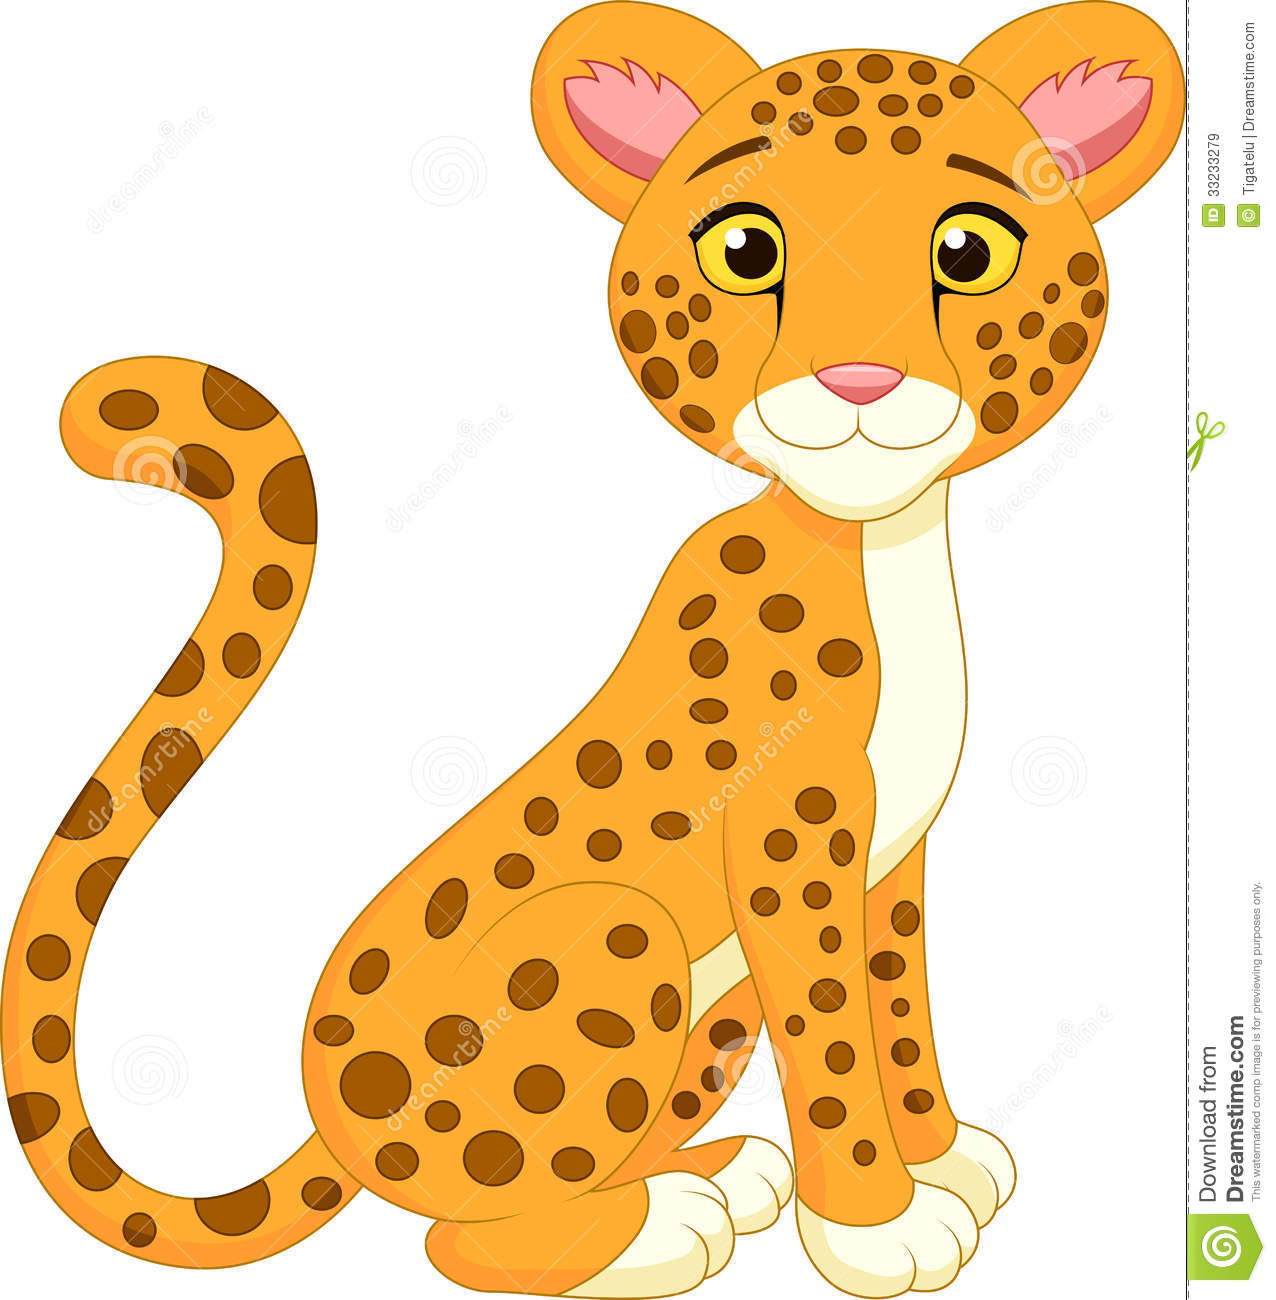 Cute Cheetah Cartoon Royalty Free Stock Images   Image  33233279